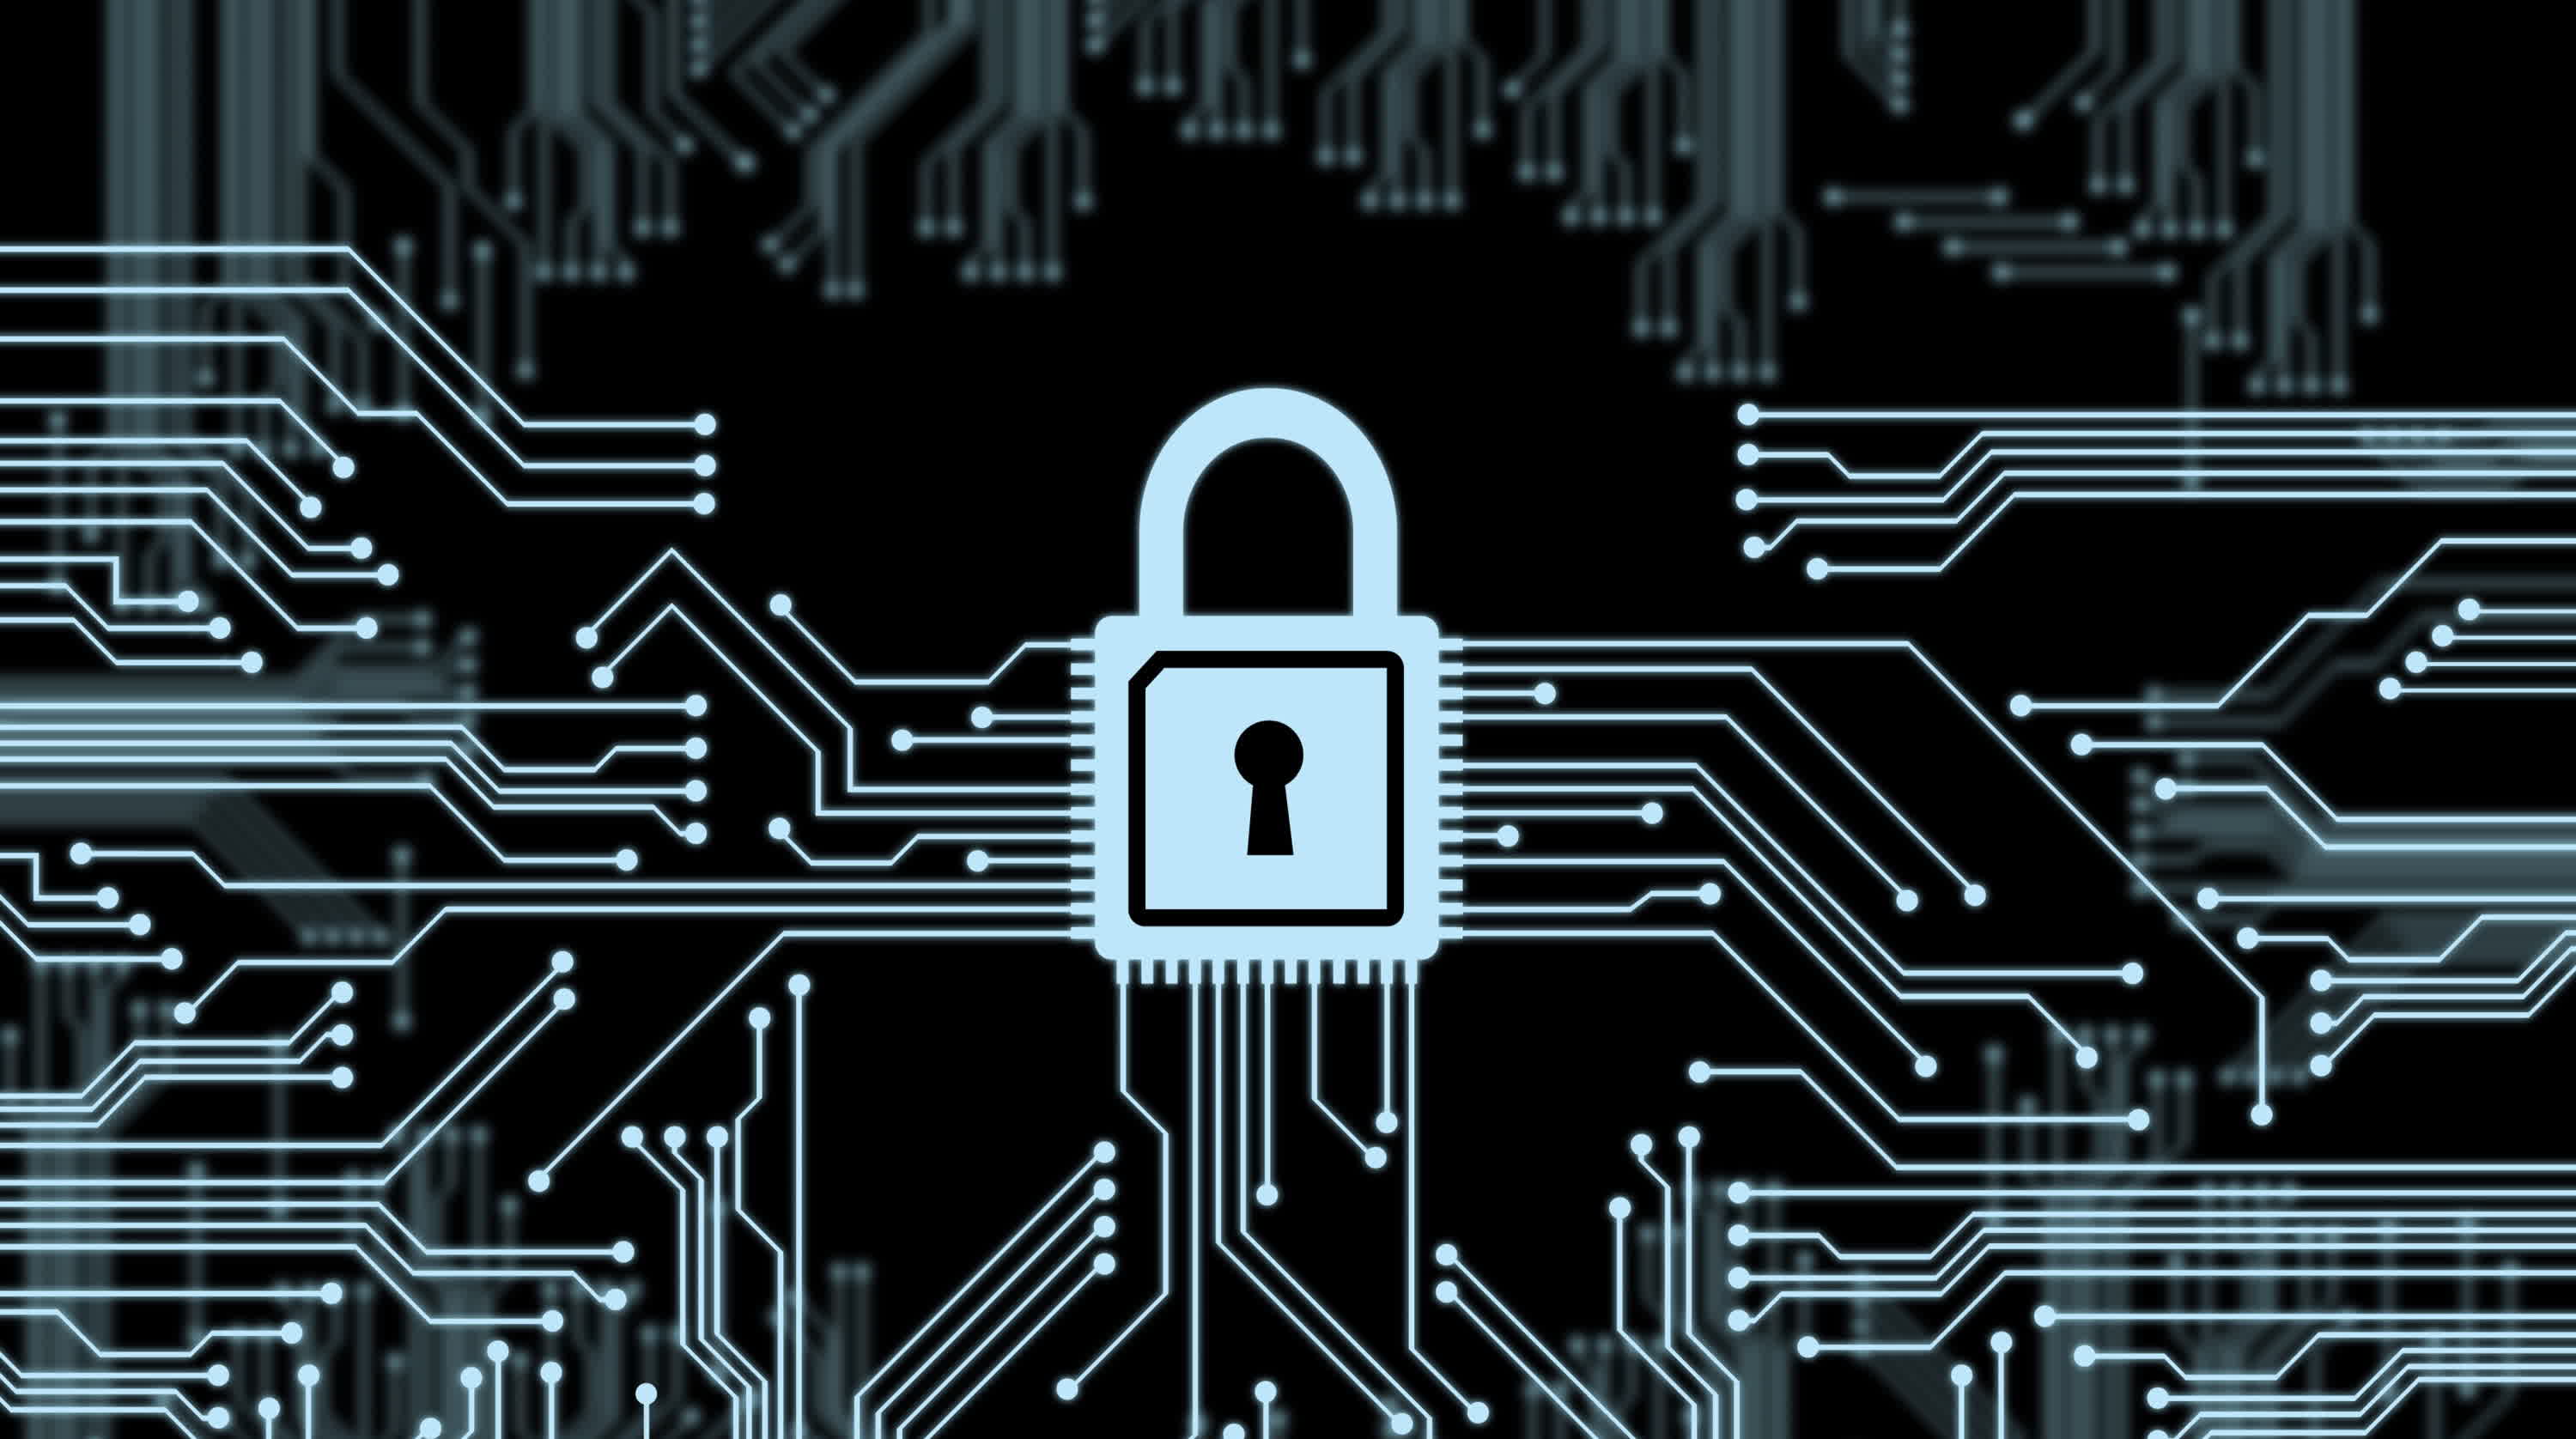 International coalition issues security advisory against LockBit ransomware